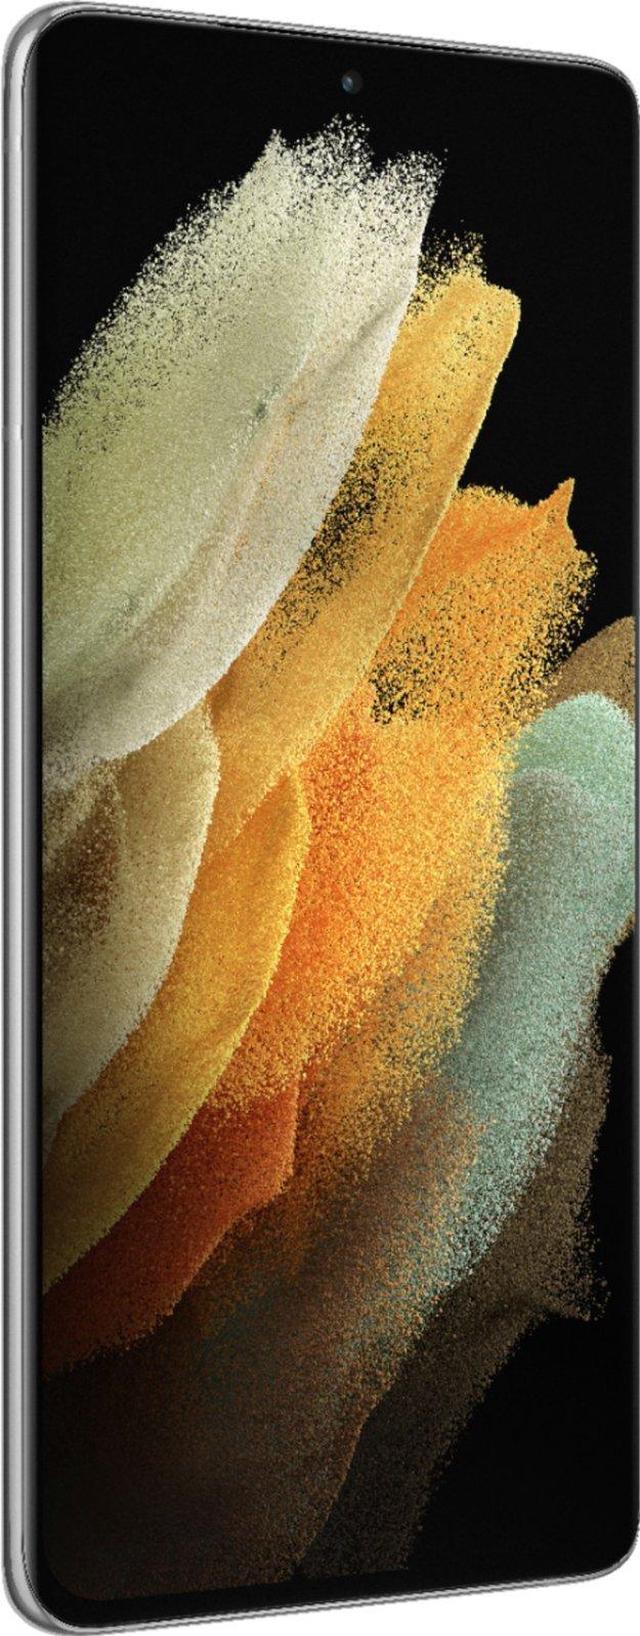 Samsung Galaxy S21 Ultra 5G, 128GB Silver - Unlocked 